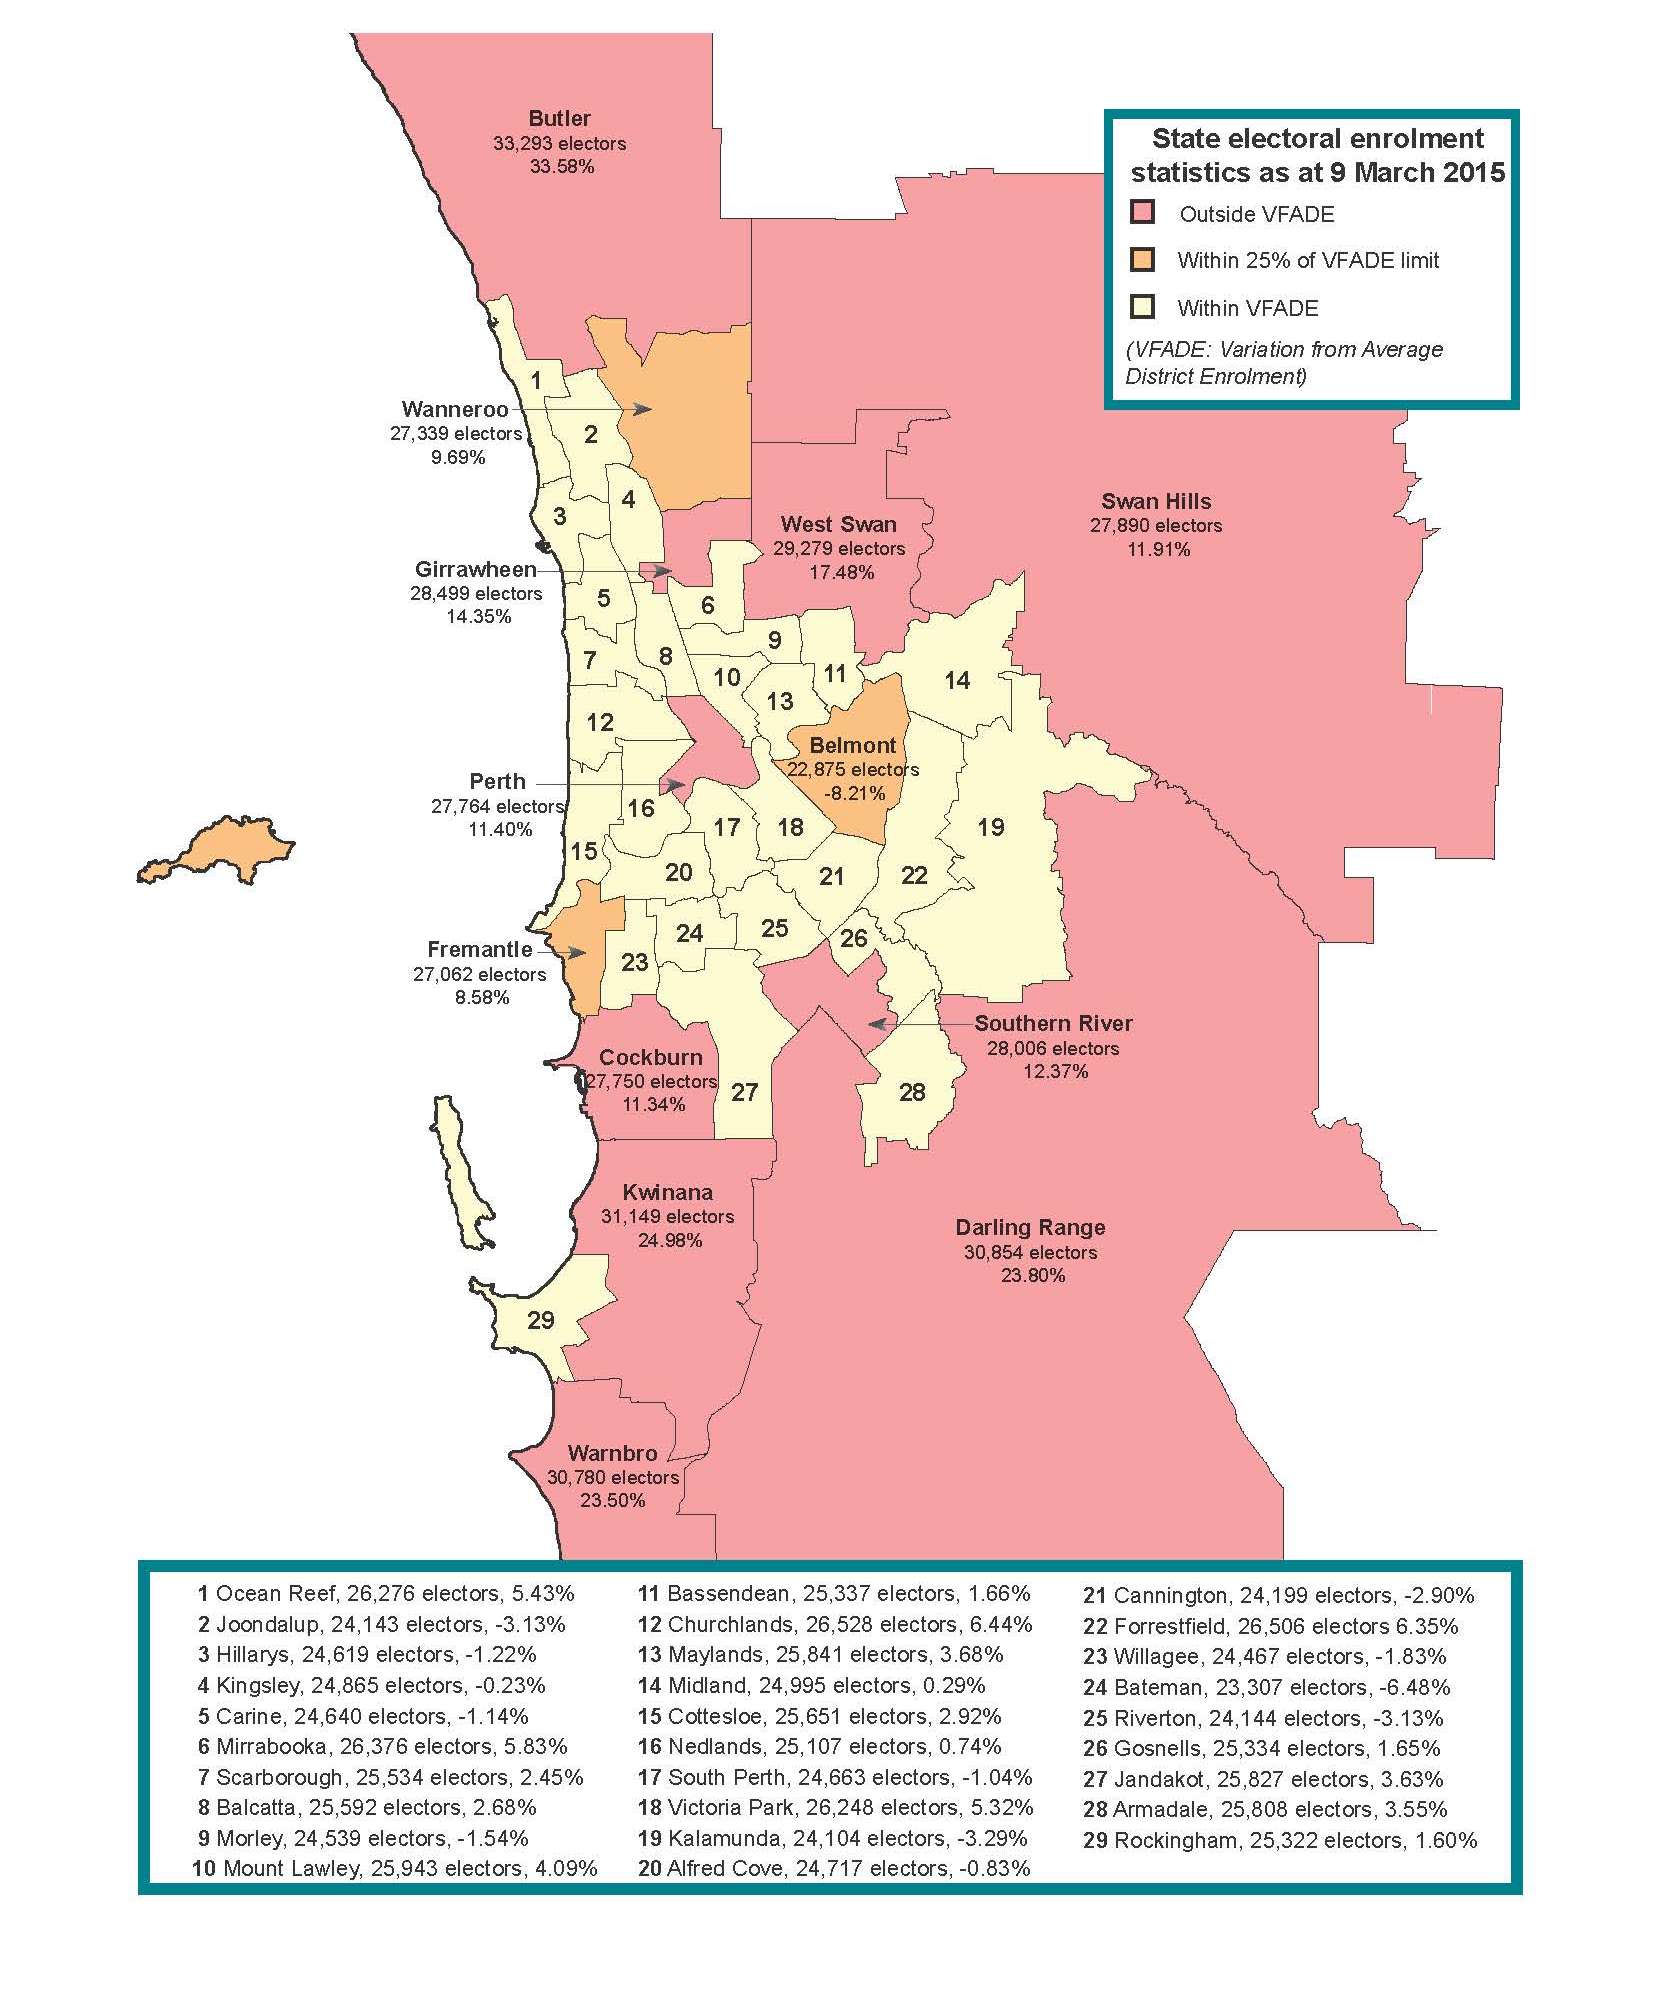 Variation from Average District Enrolment, Metropolitan Districts. Clcik for PDF version or see http://www.boundaries.wa.gov.au/electoral-boundaries/electoral-enrolment-statistics